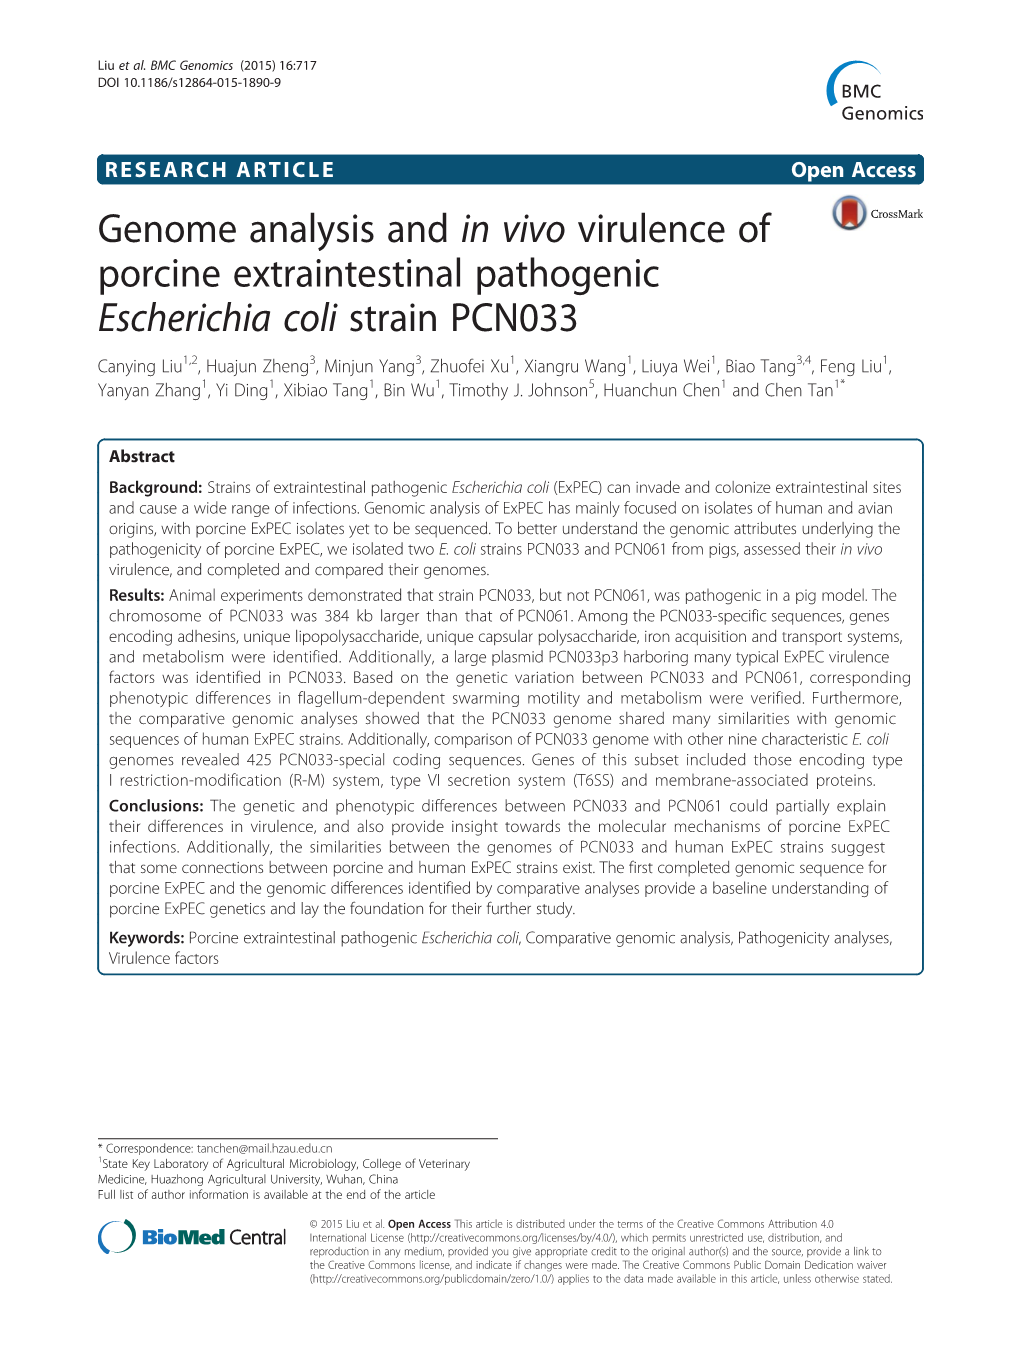 Genome Analysis and in Vivo Virulence of Porcine Extraintestinal